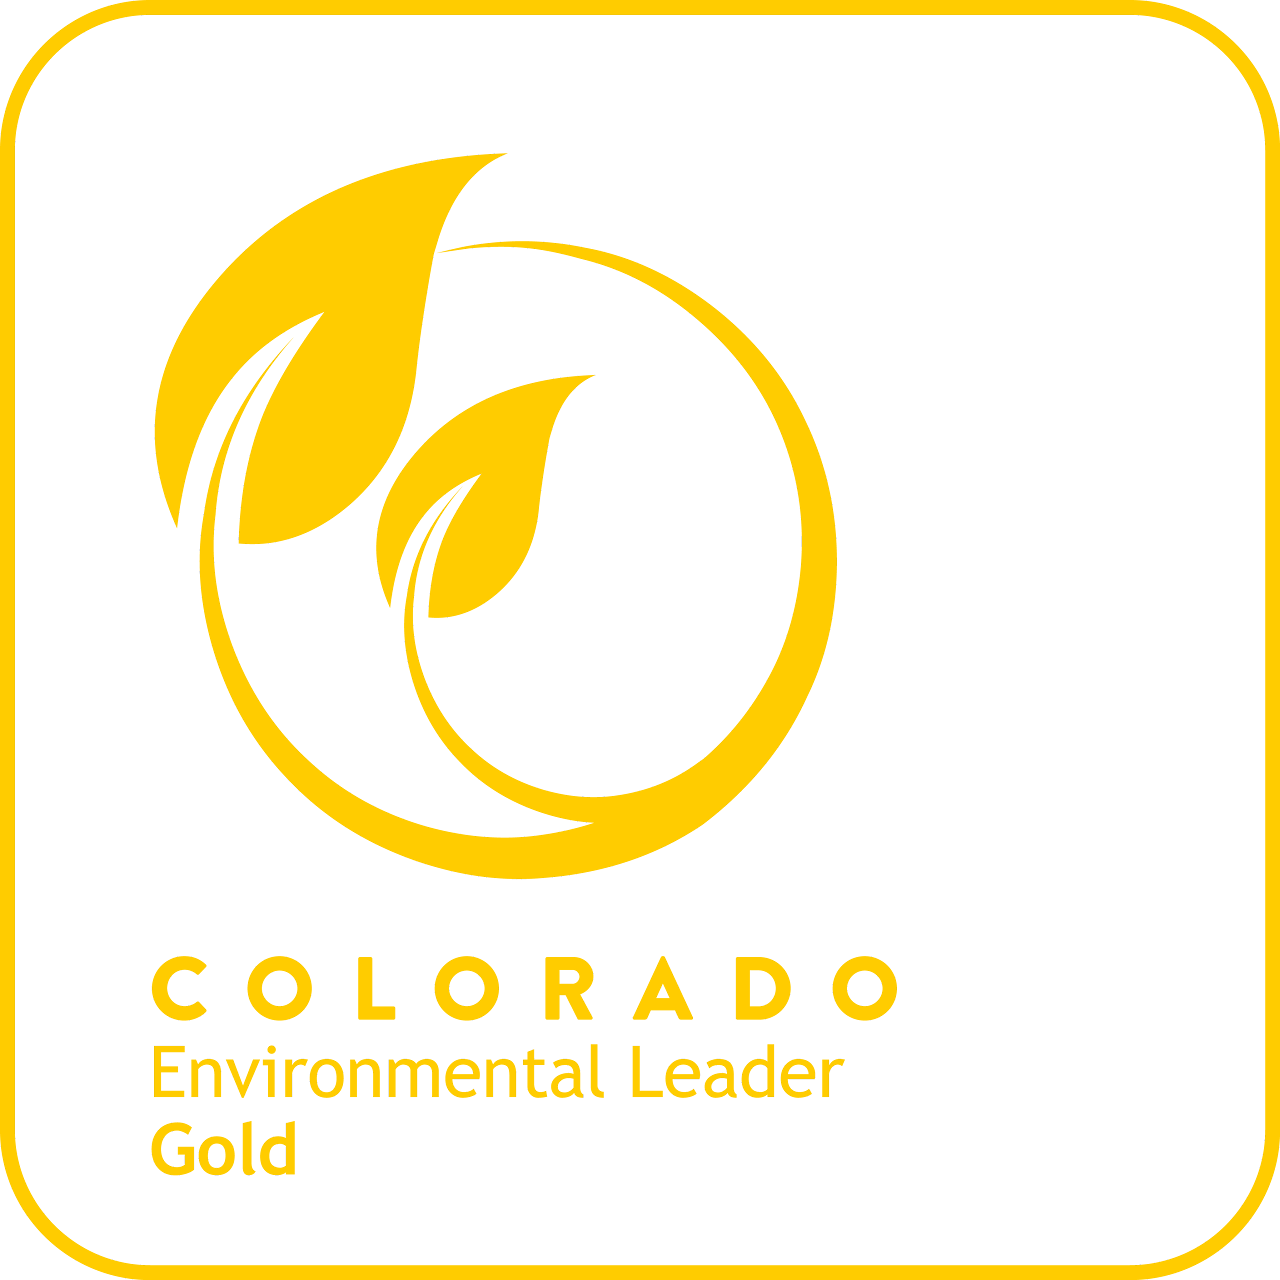 Colorado Environmental Leadership Program Gold Leader